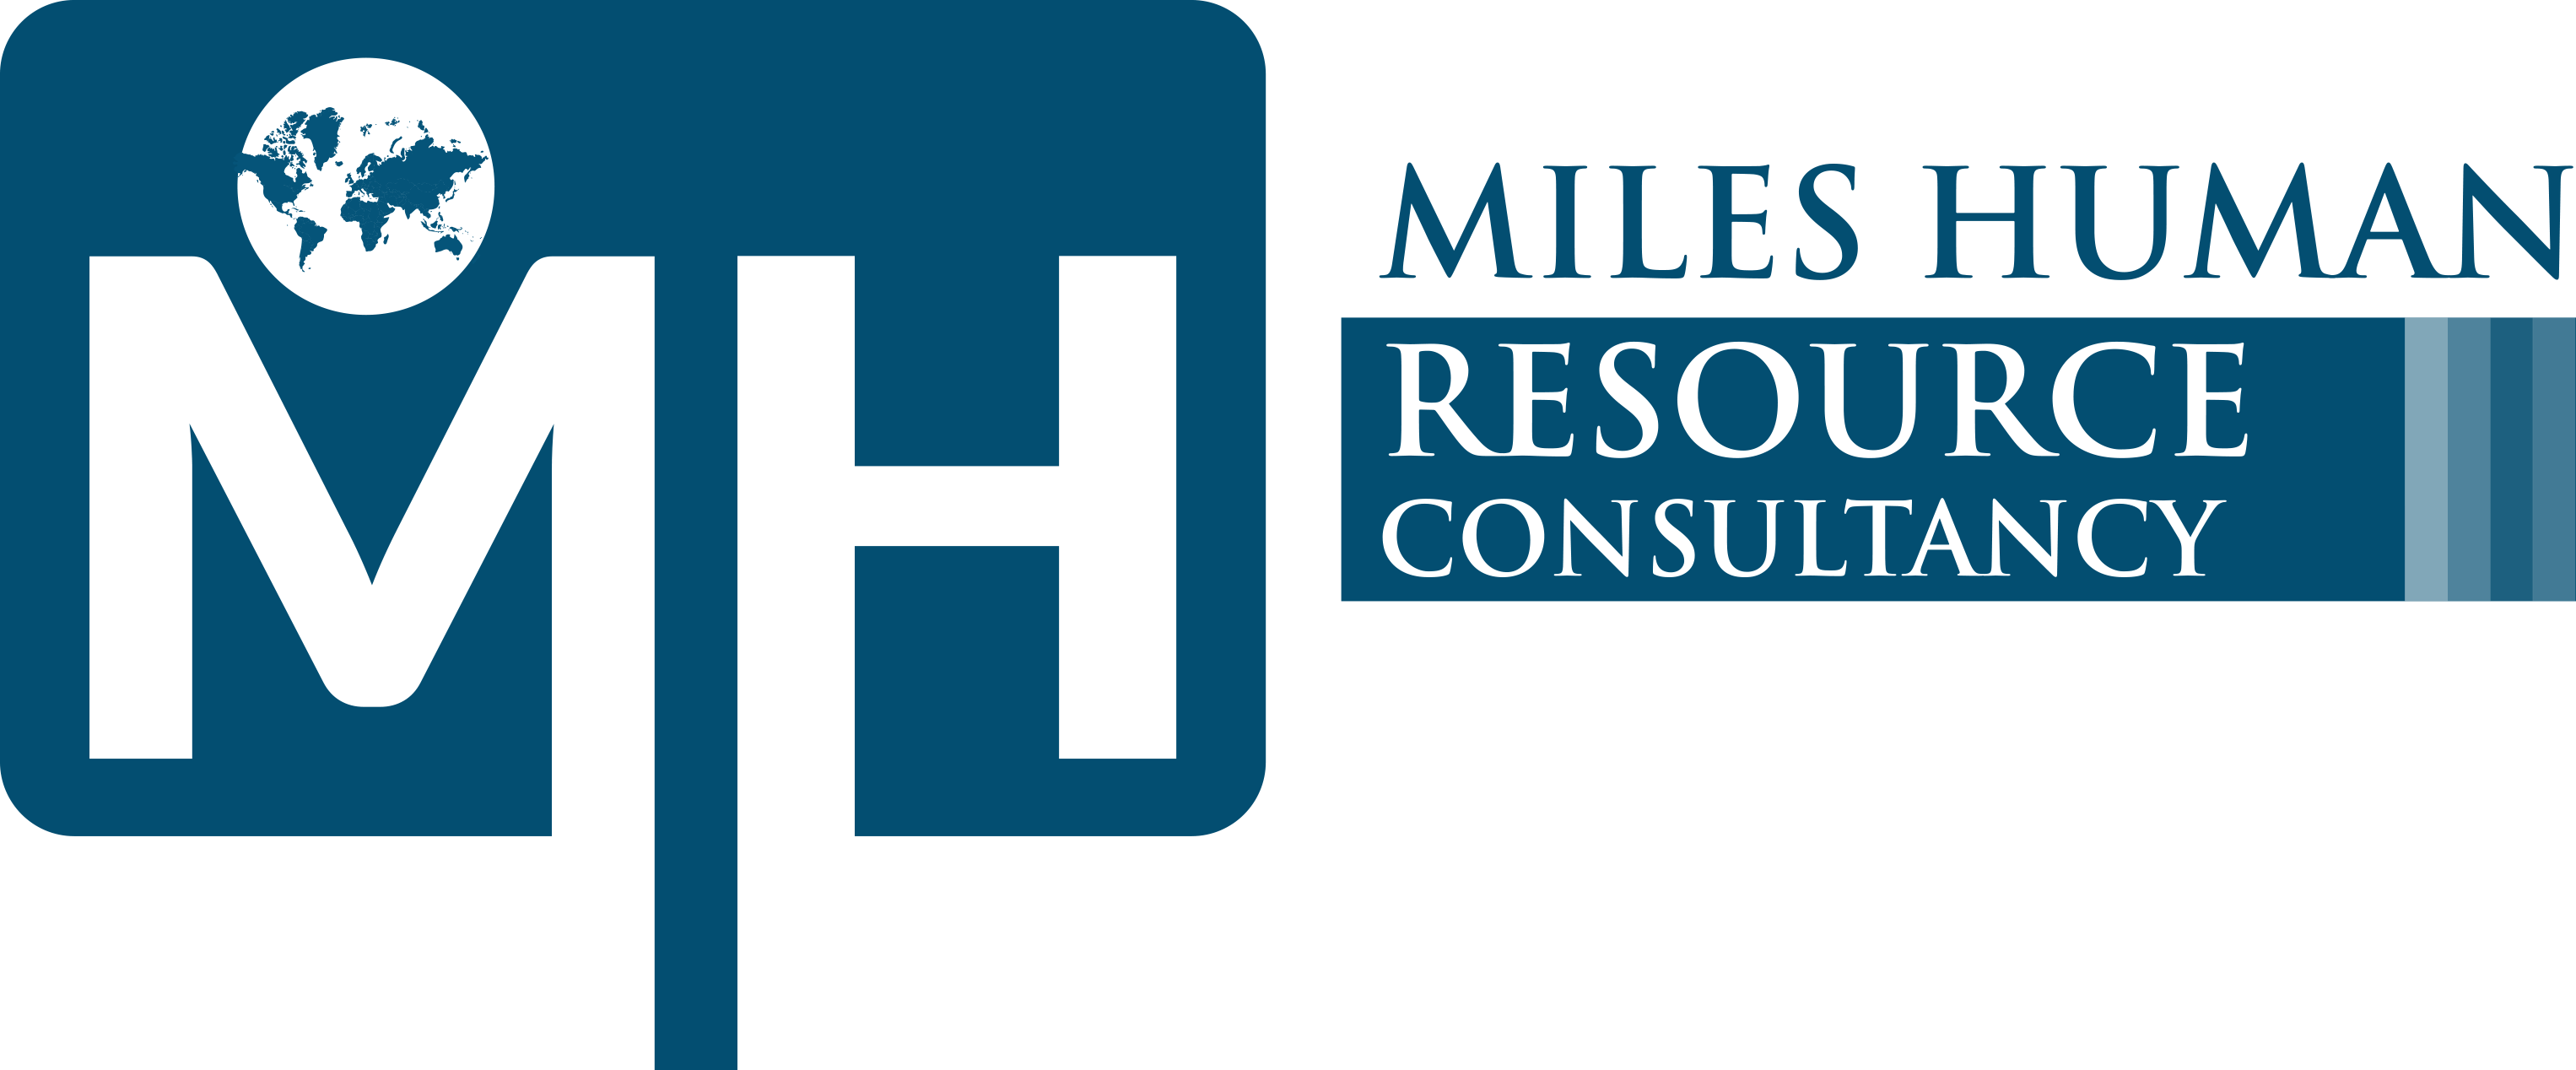 Miles Human Resource Consultancy Logo